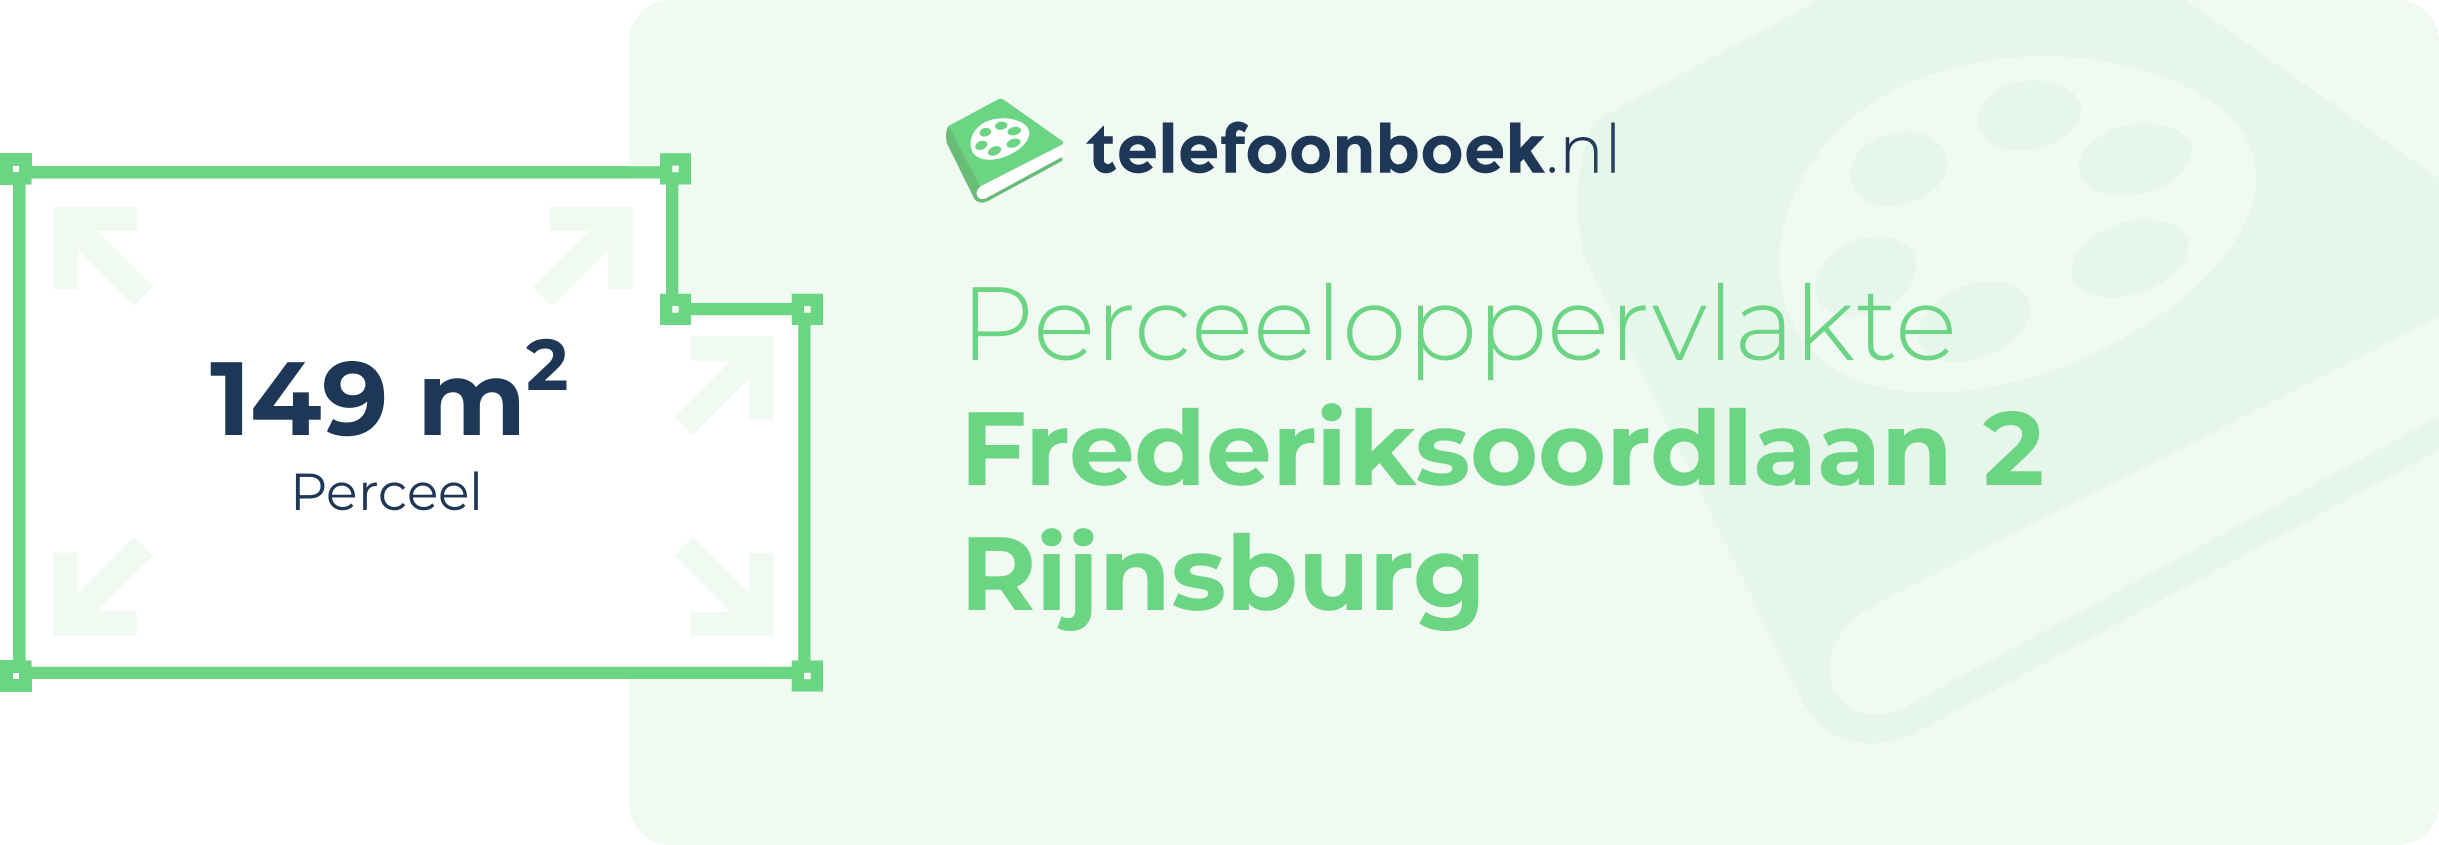 Perceeloppervlakte Frederiksoordlaan 2 Rijnsburg